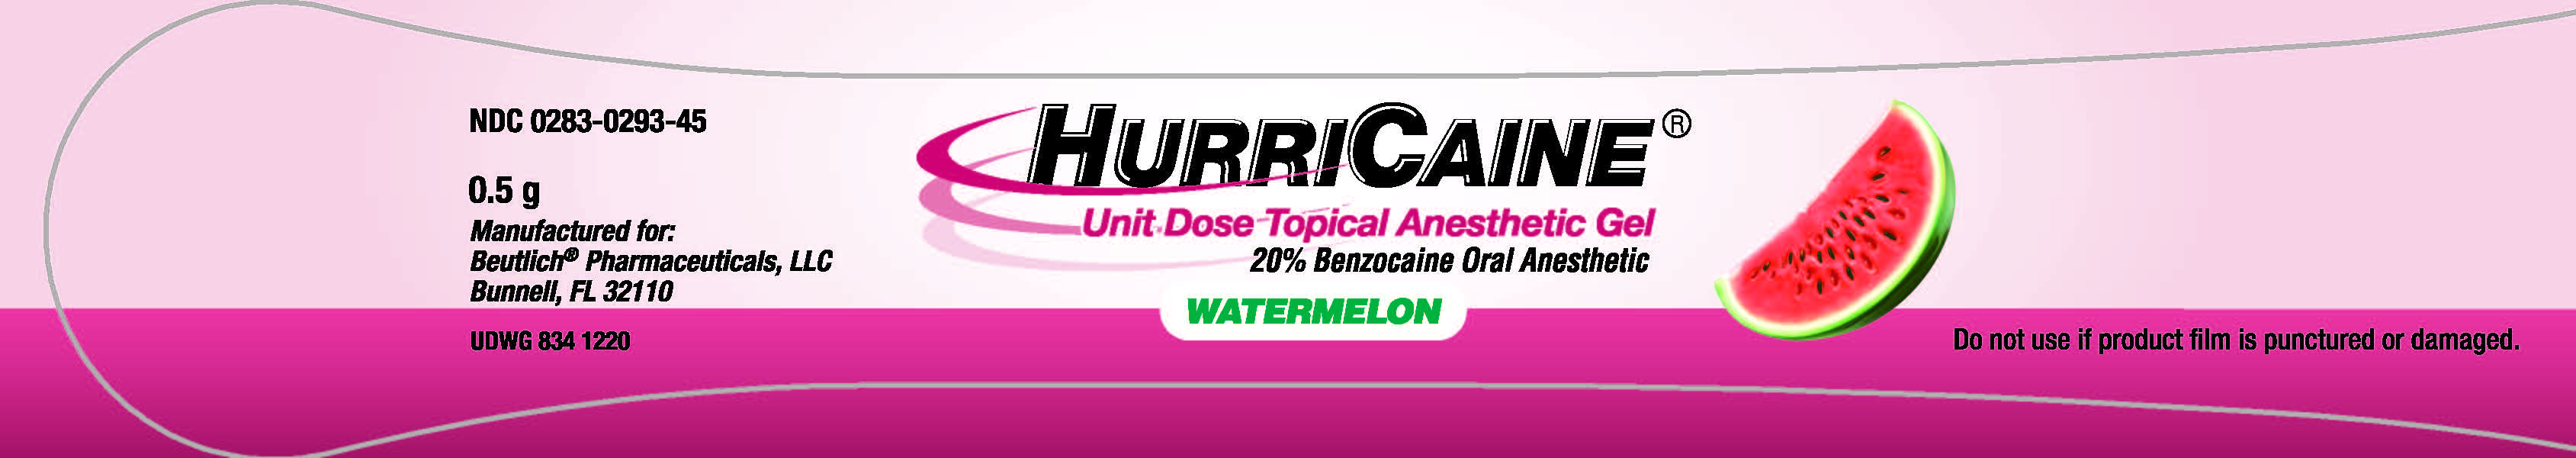 unit dose gel Watermelon